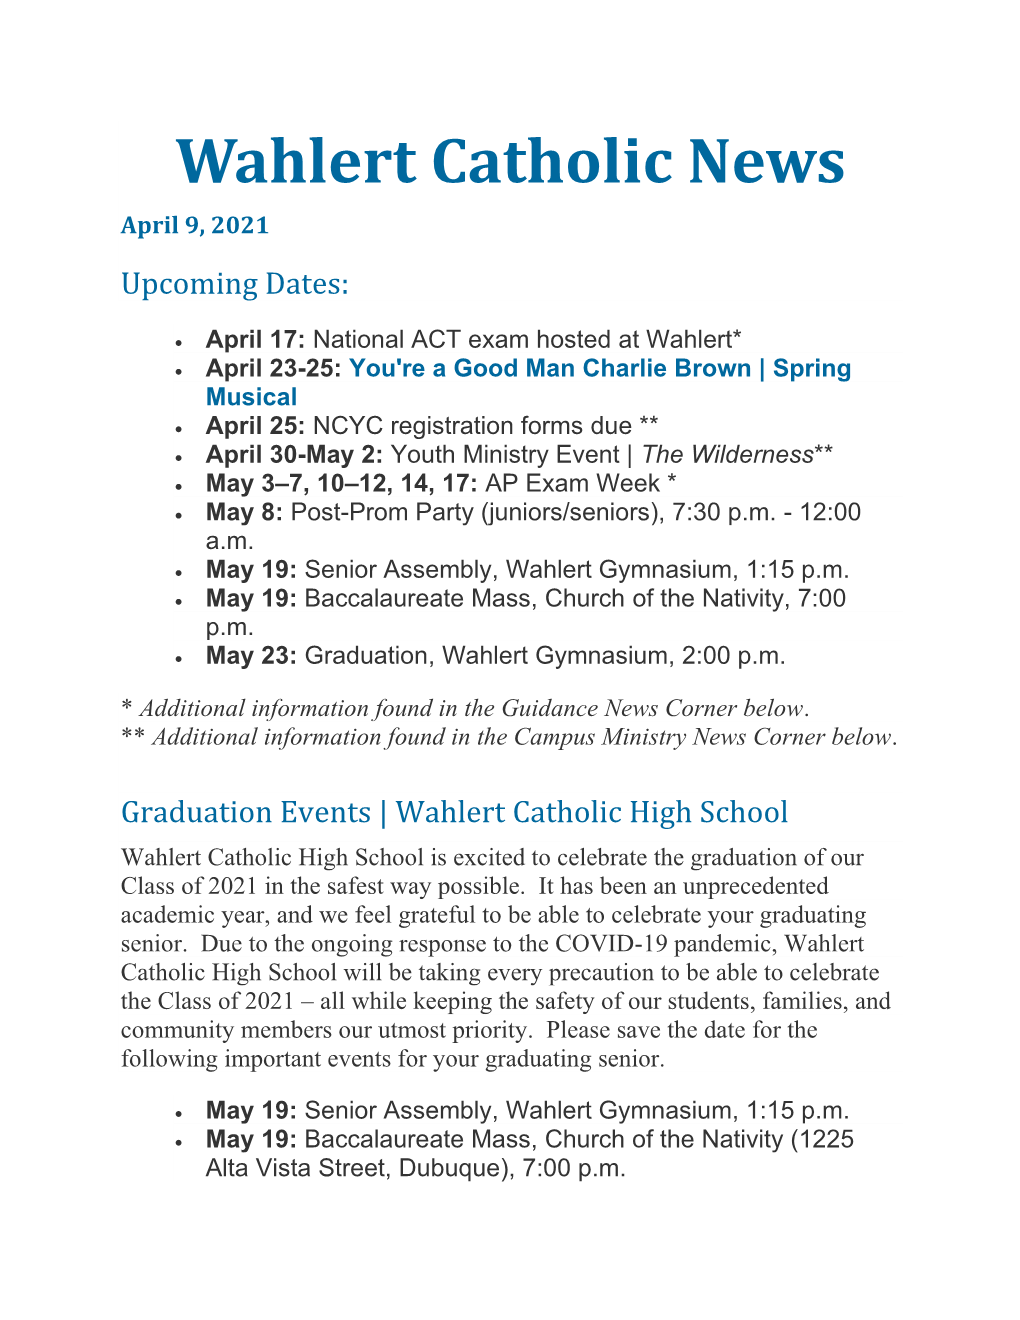 Wahlert Catholic News April 9, 2021 Upcoming Dates